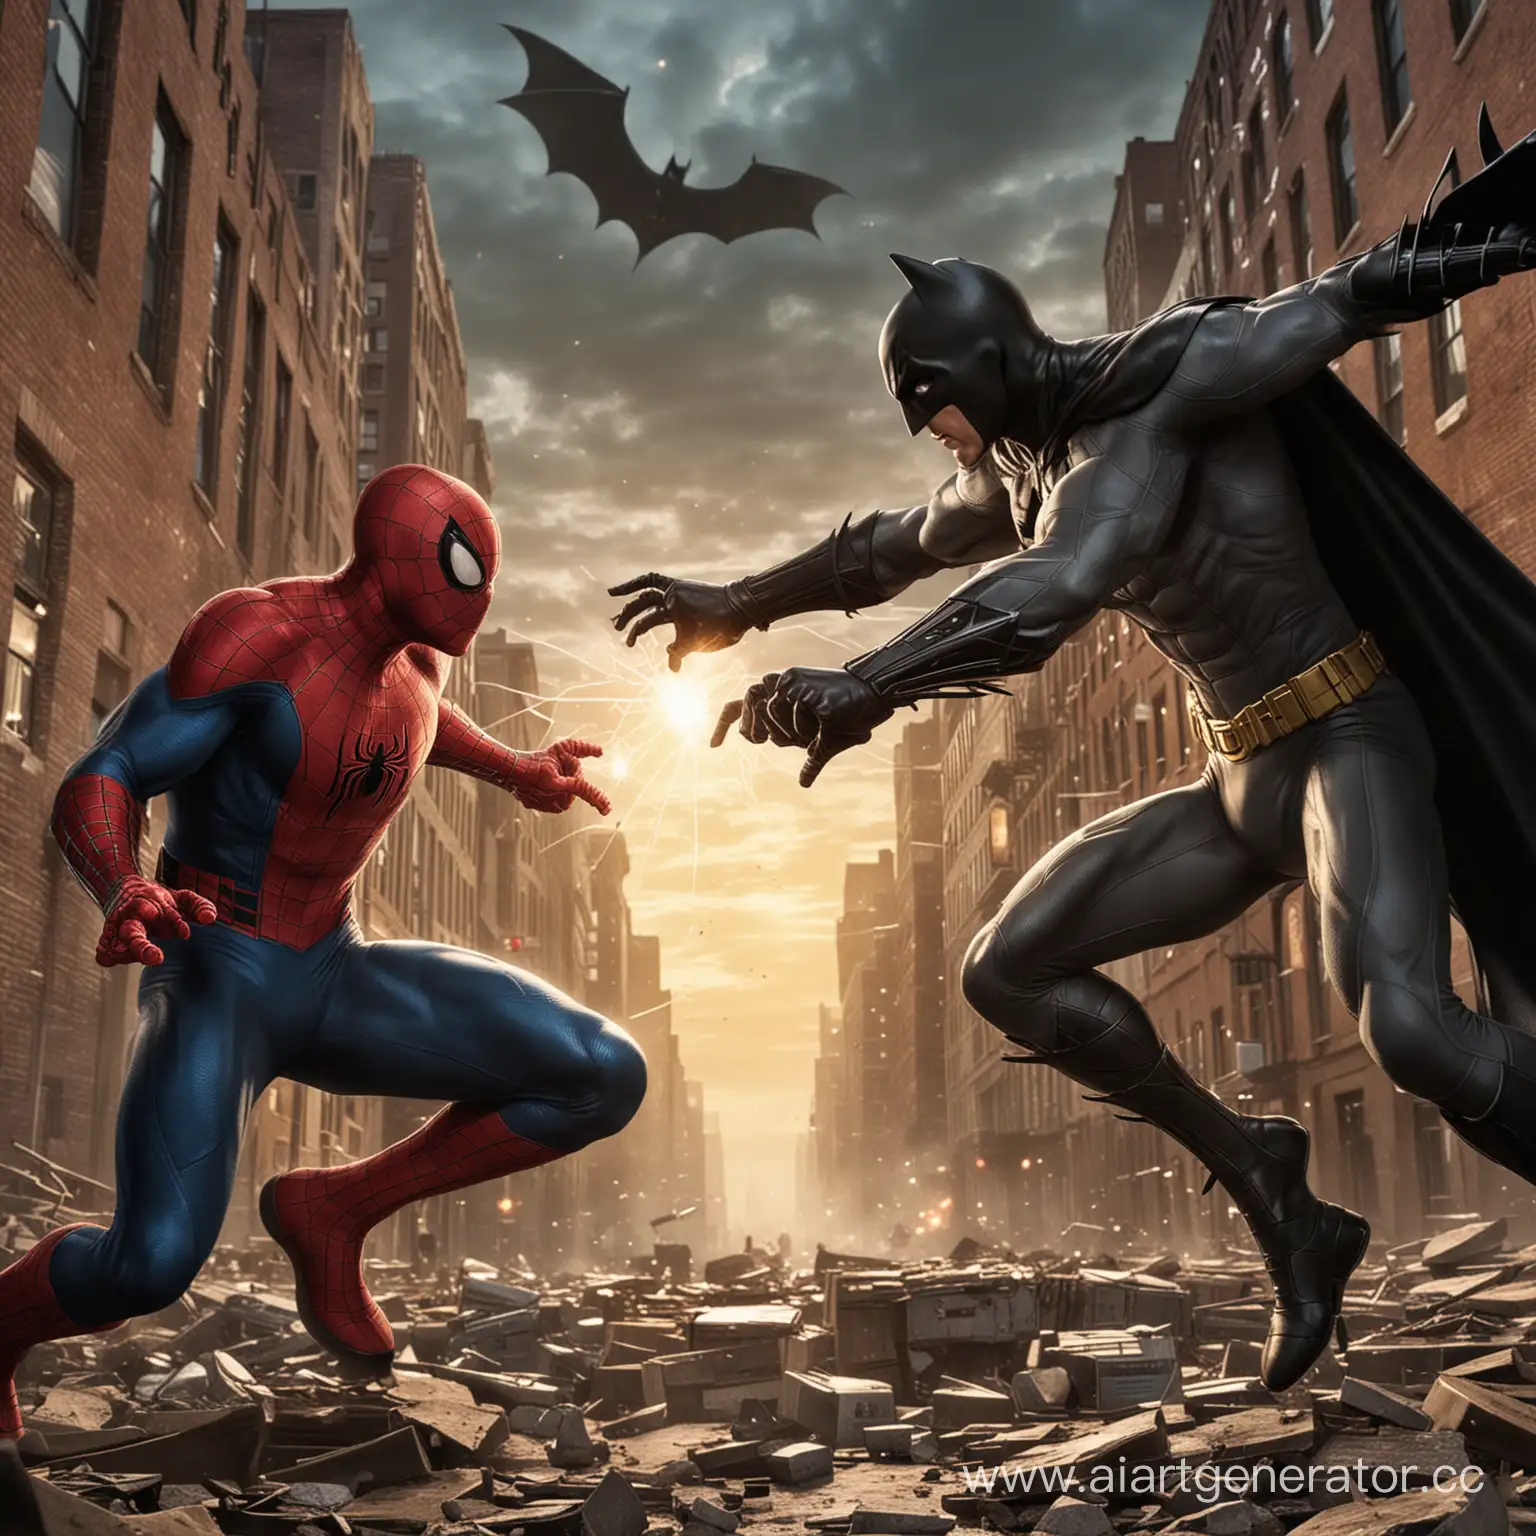 Epic-Showdown-SpiderMan-and-Batman-in-Urban-Combat